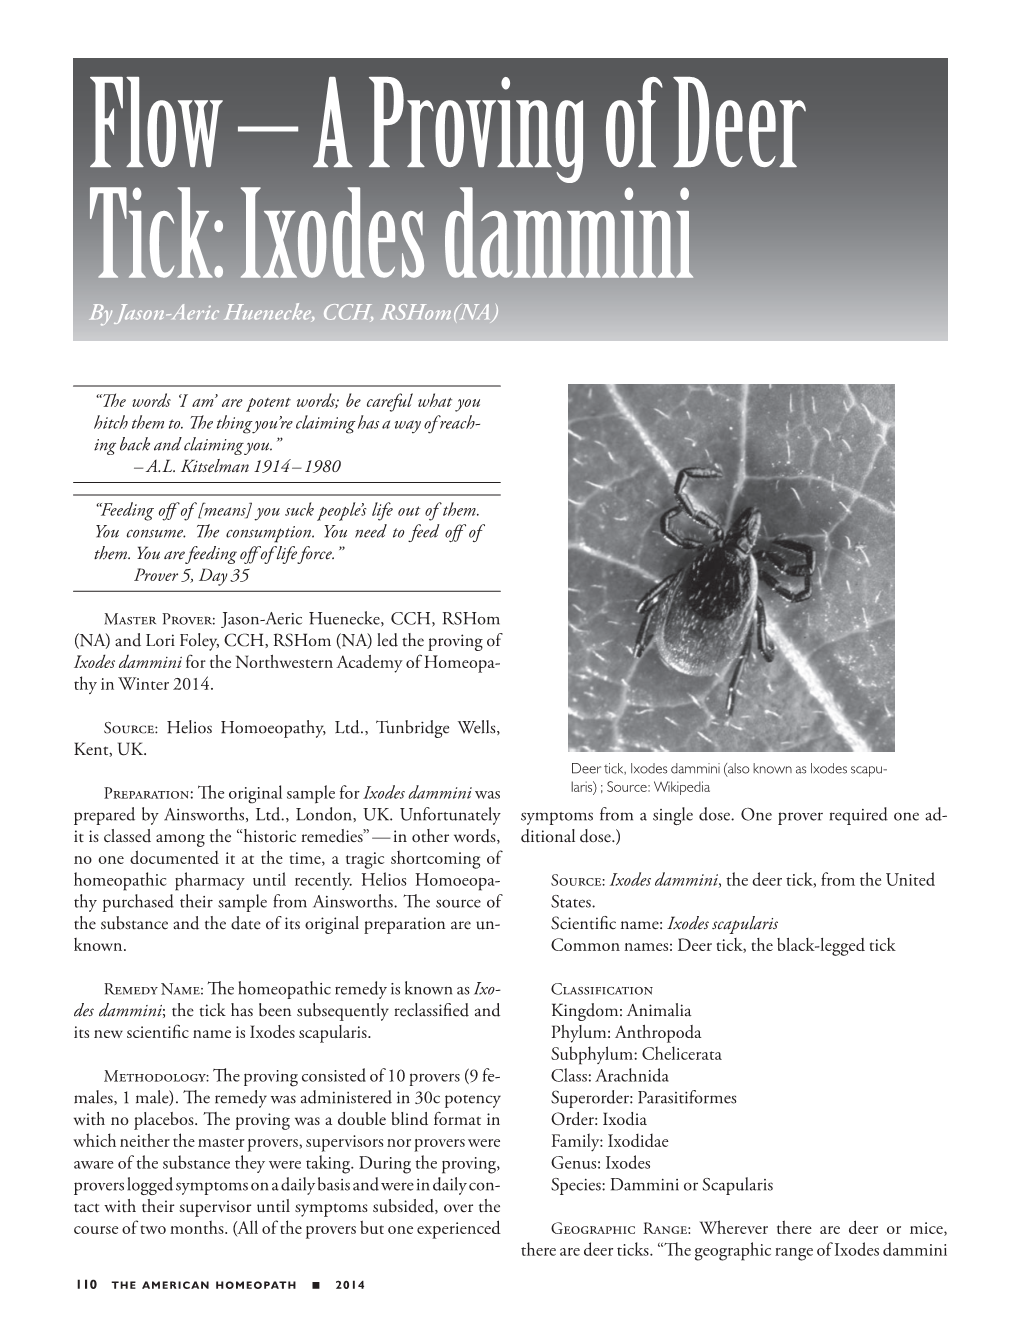 A Proving of Deer Tick: Ixodes Dammini by Jason-Aeric Huenecke, CCH, Rshom(NA)